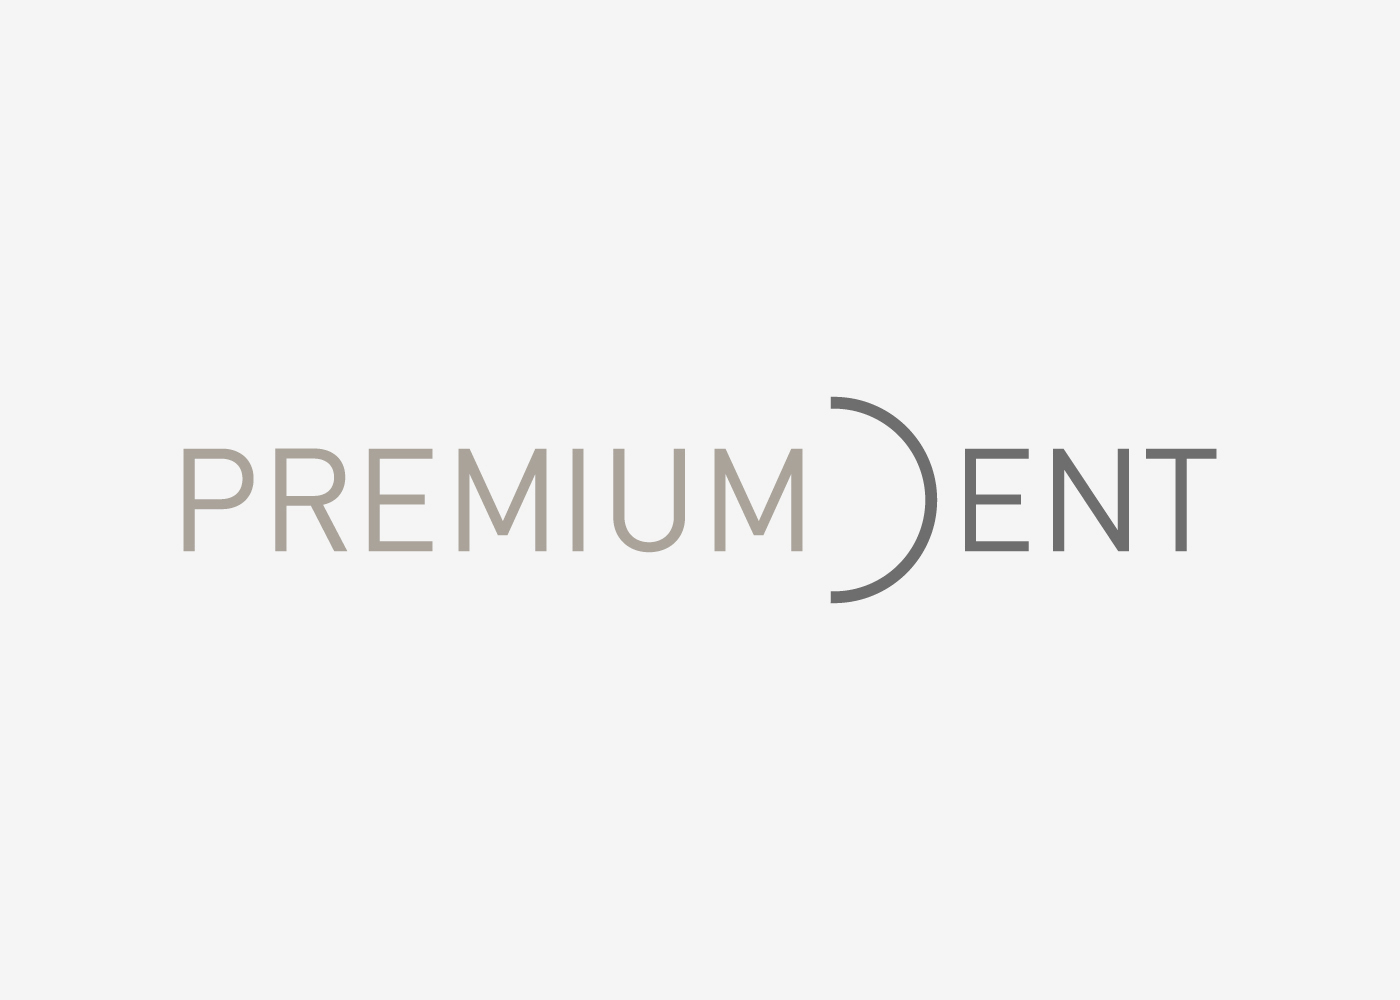 Vizualni identitet poliklinike Premium Dent